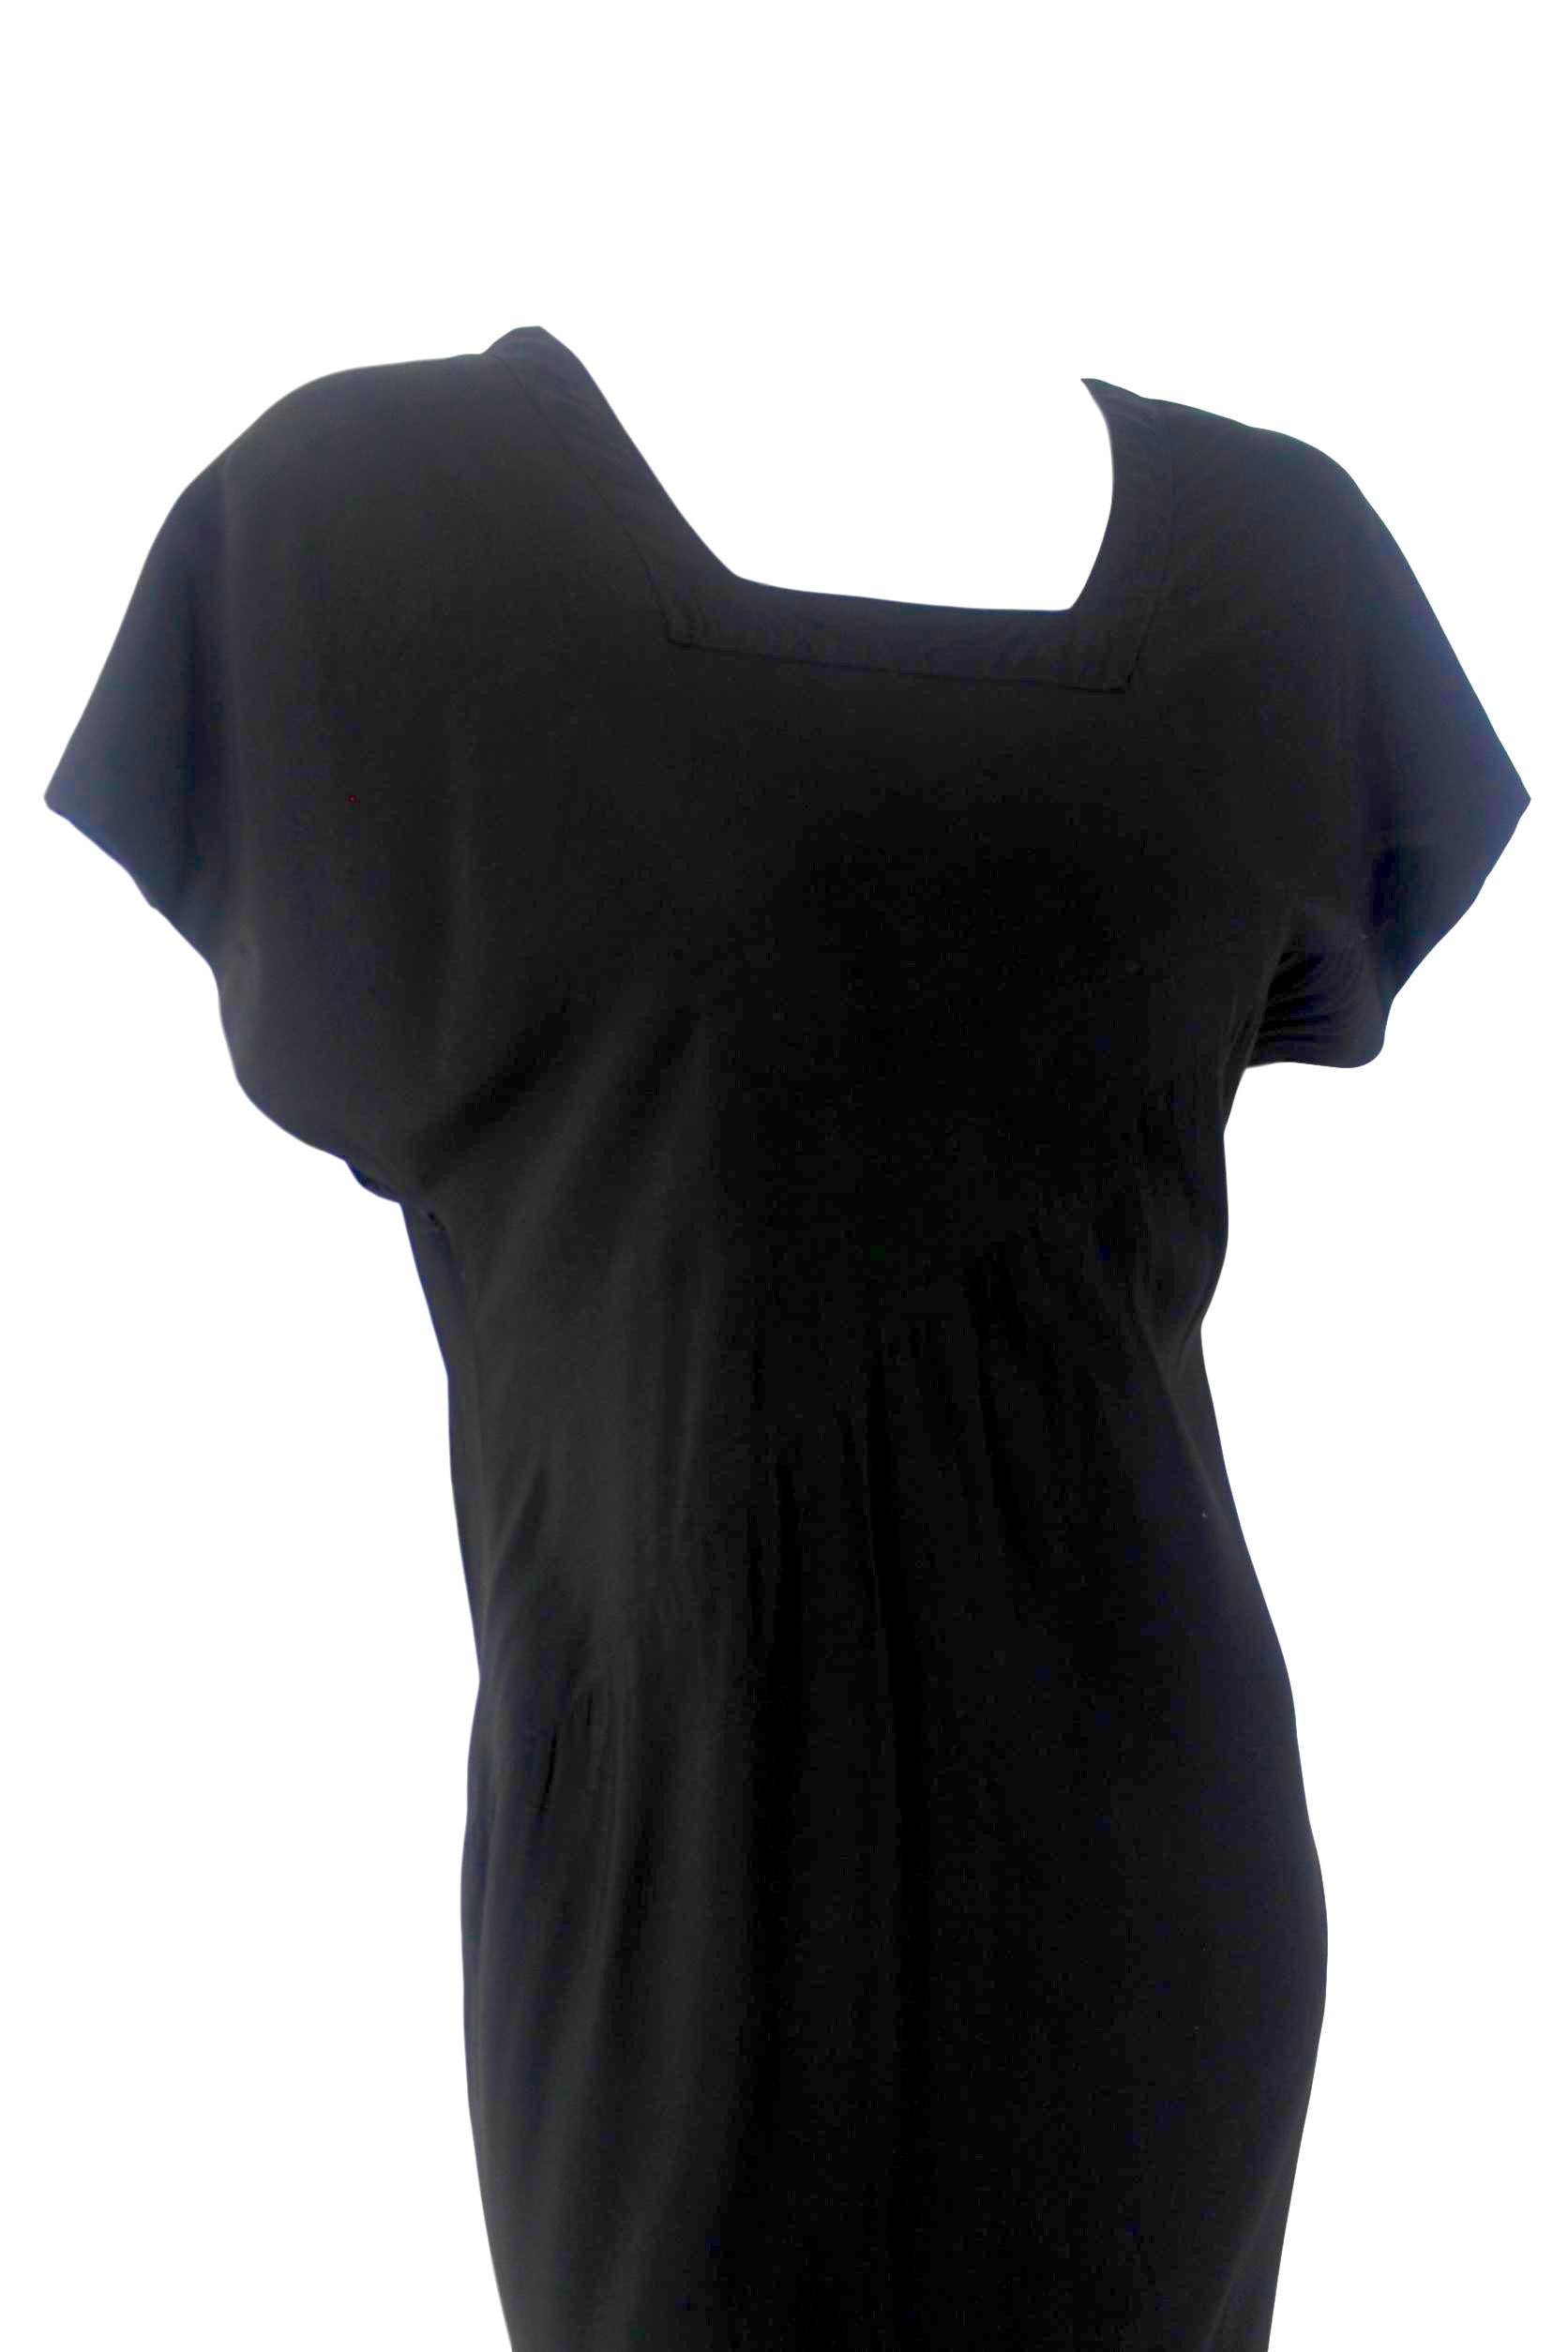 John Galliano Black Bias Cut Silk Dress Made in England Label In Good Condition For Sale In Bath, GB